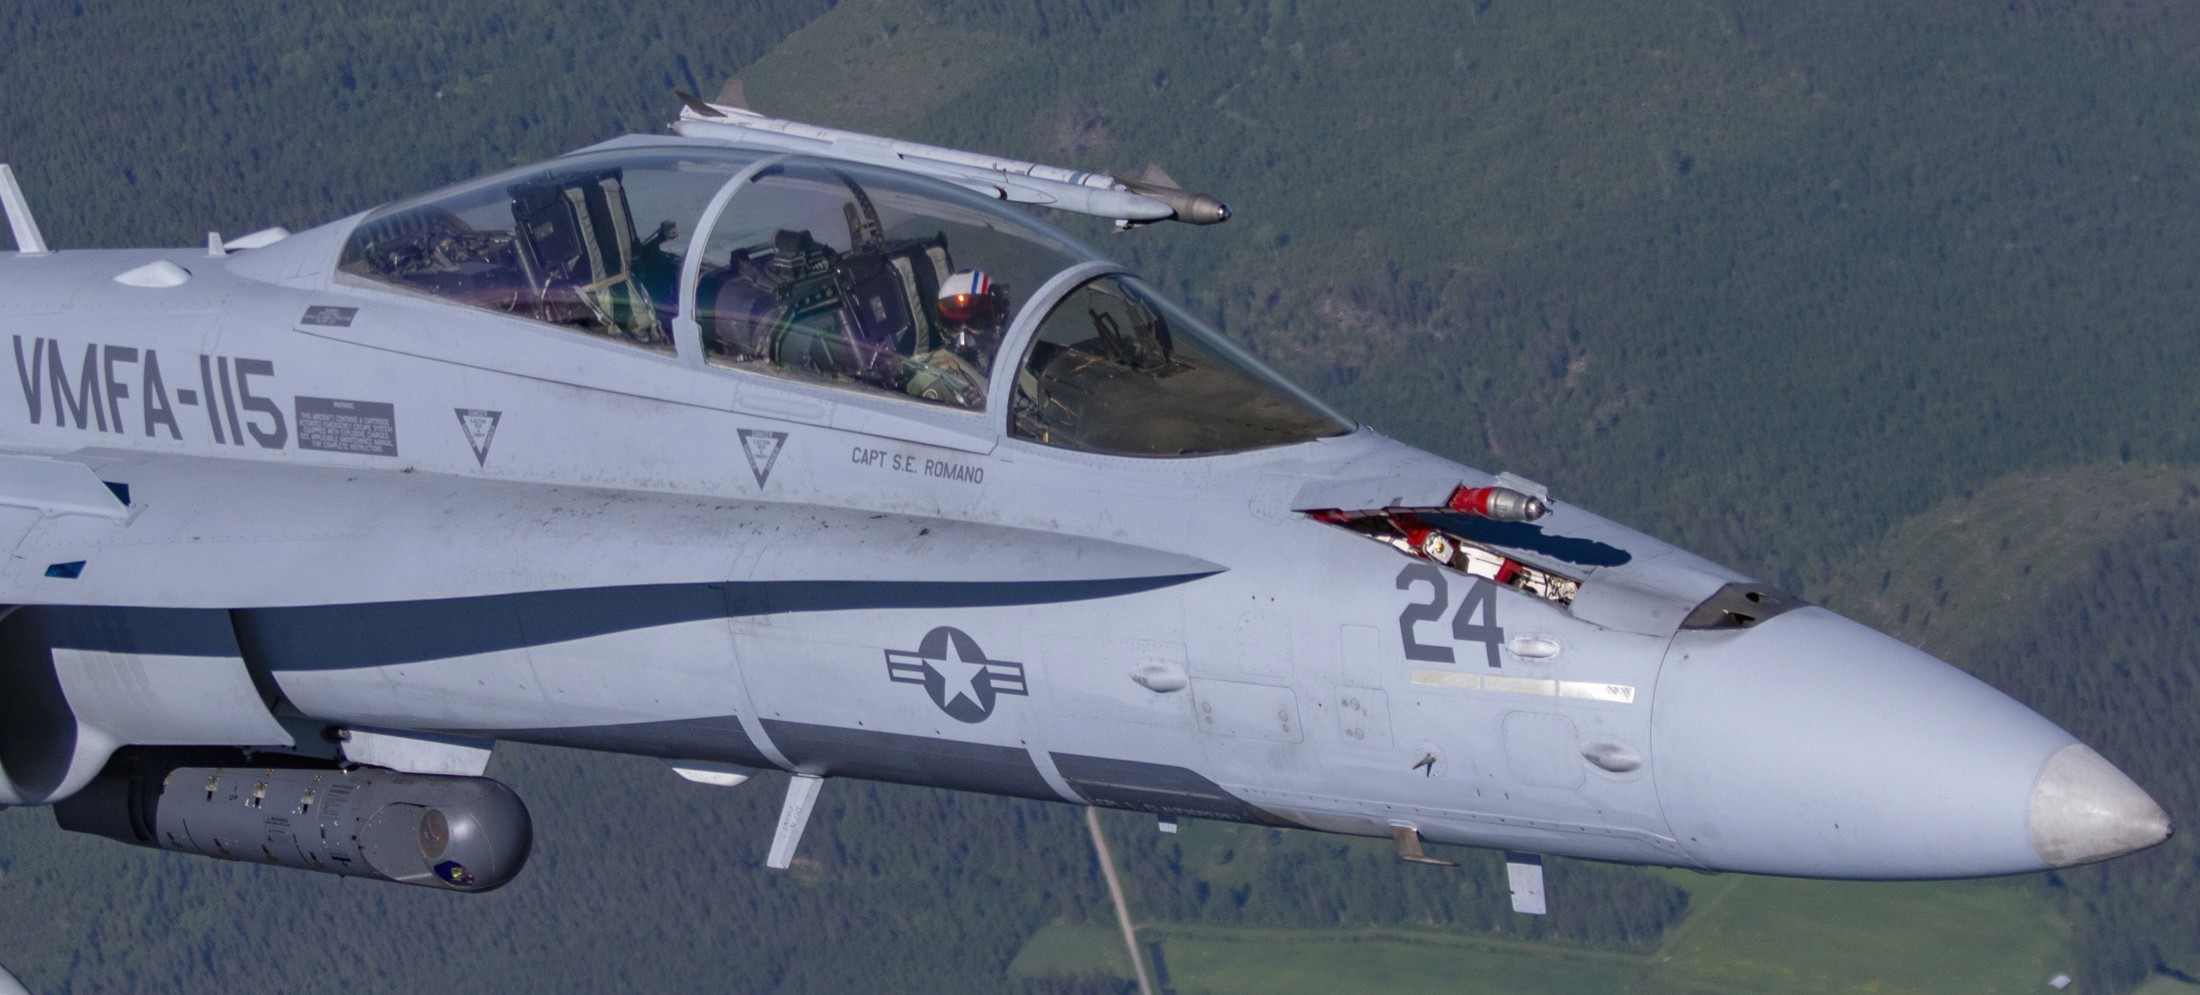 vmfa-115 silver eagles marine fighter attack squadron usmc f/a-18d hornet 209 rissala air base finland